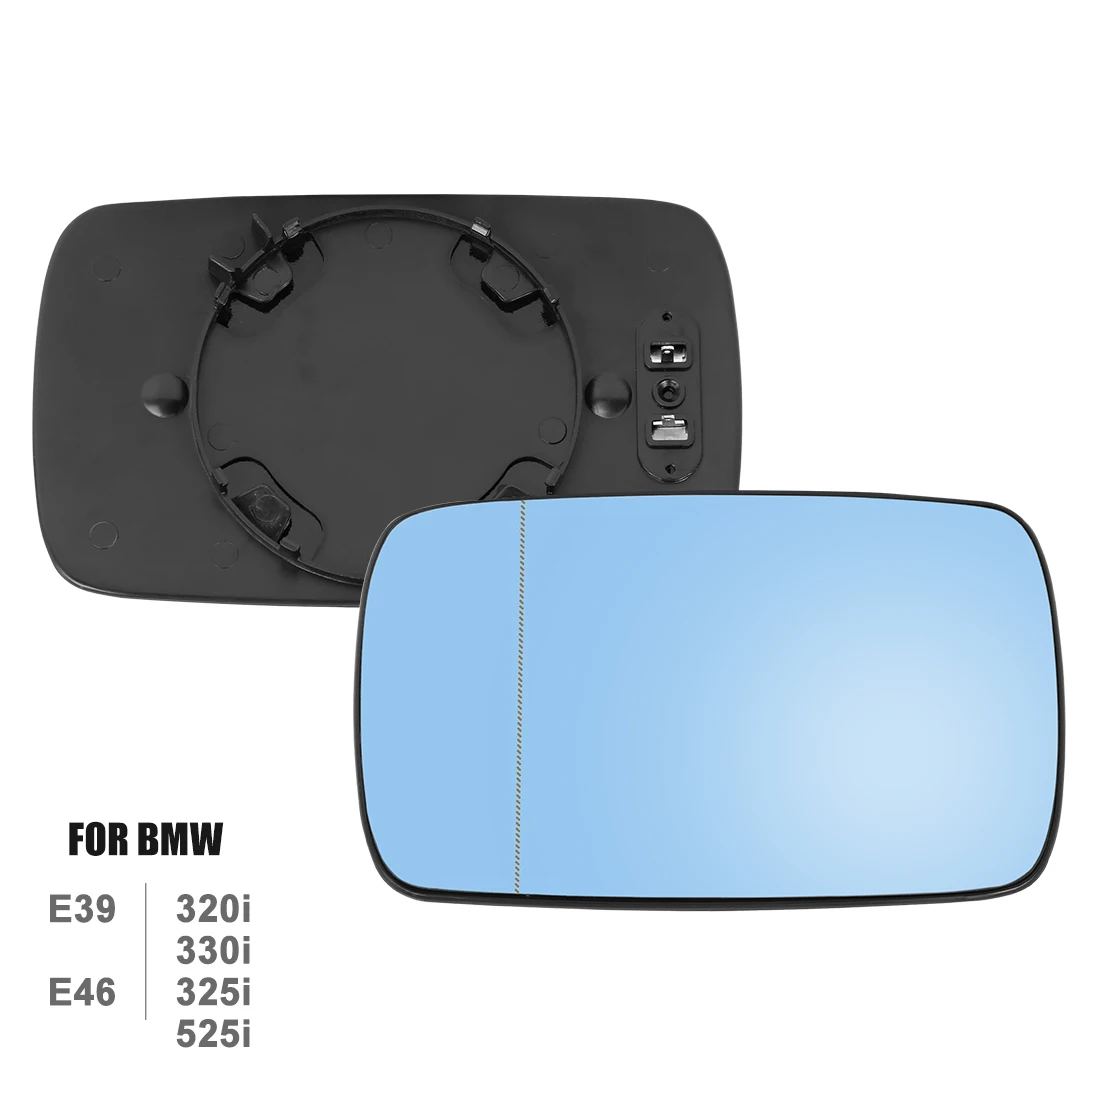 X Autohaux 1 пара боковое зеркало стекло с Опорной пластиной с подогревом для BMW E39 E46 320i 330i 325i 525i